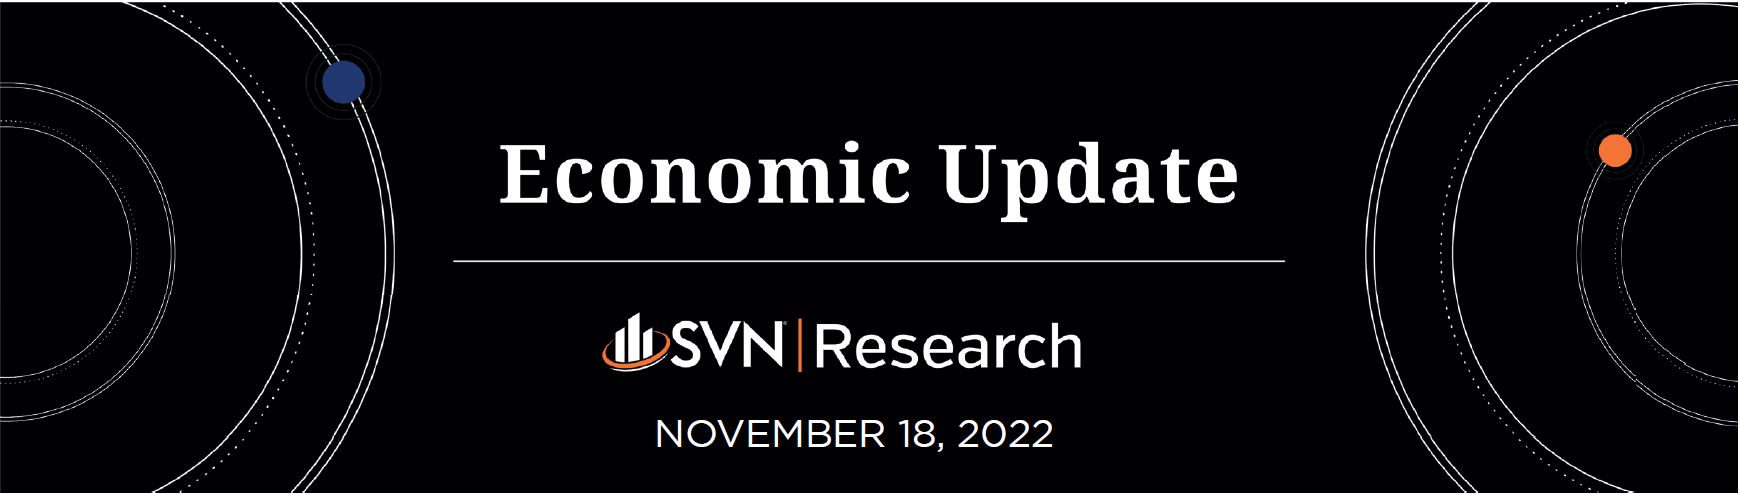 SVN | Research Economic Update 11.18.2022